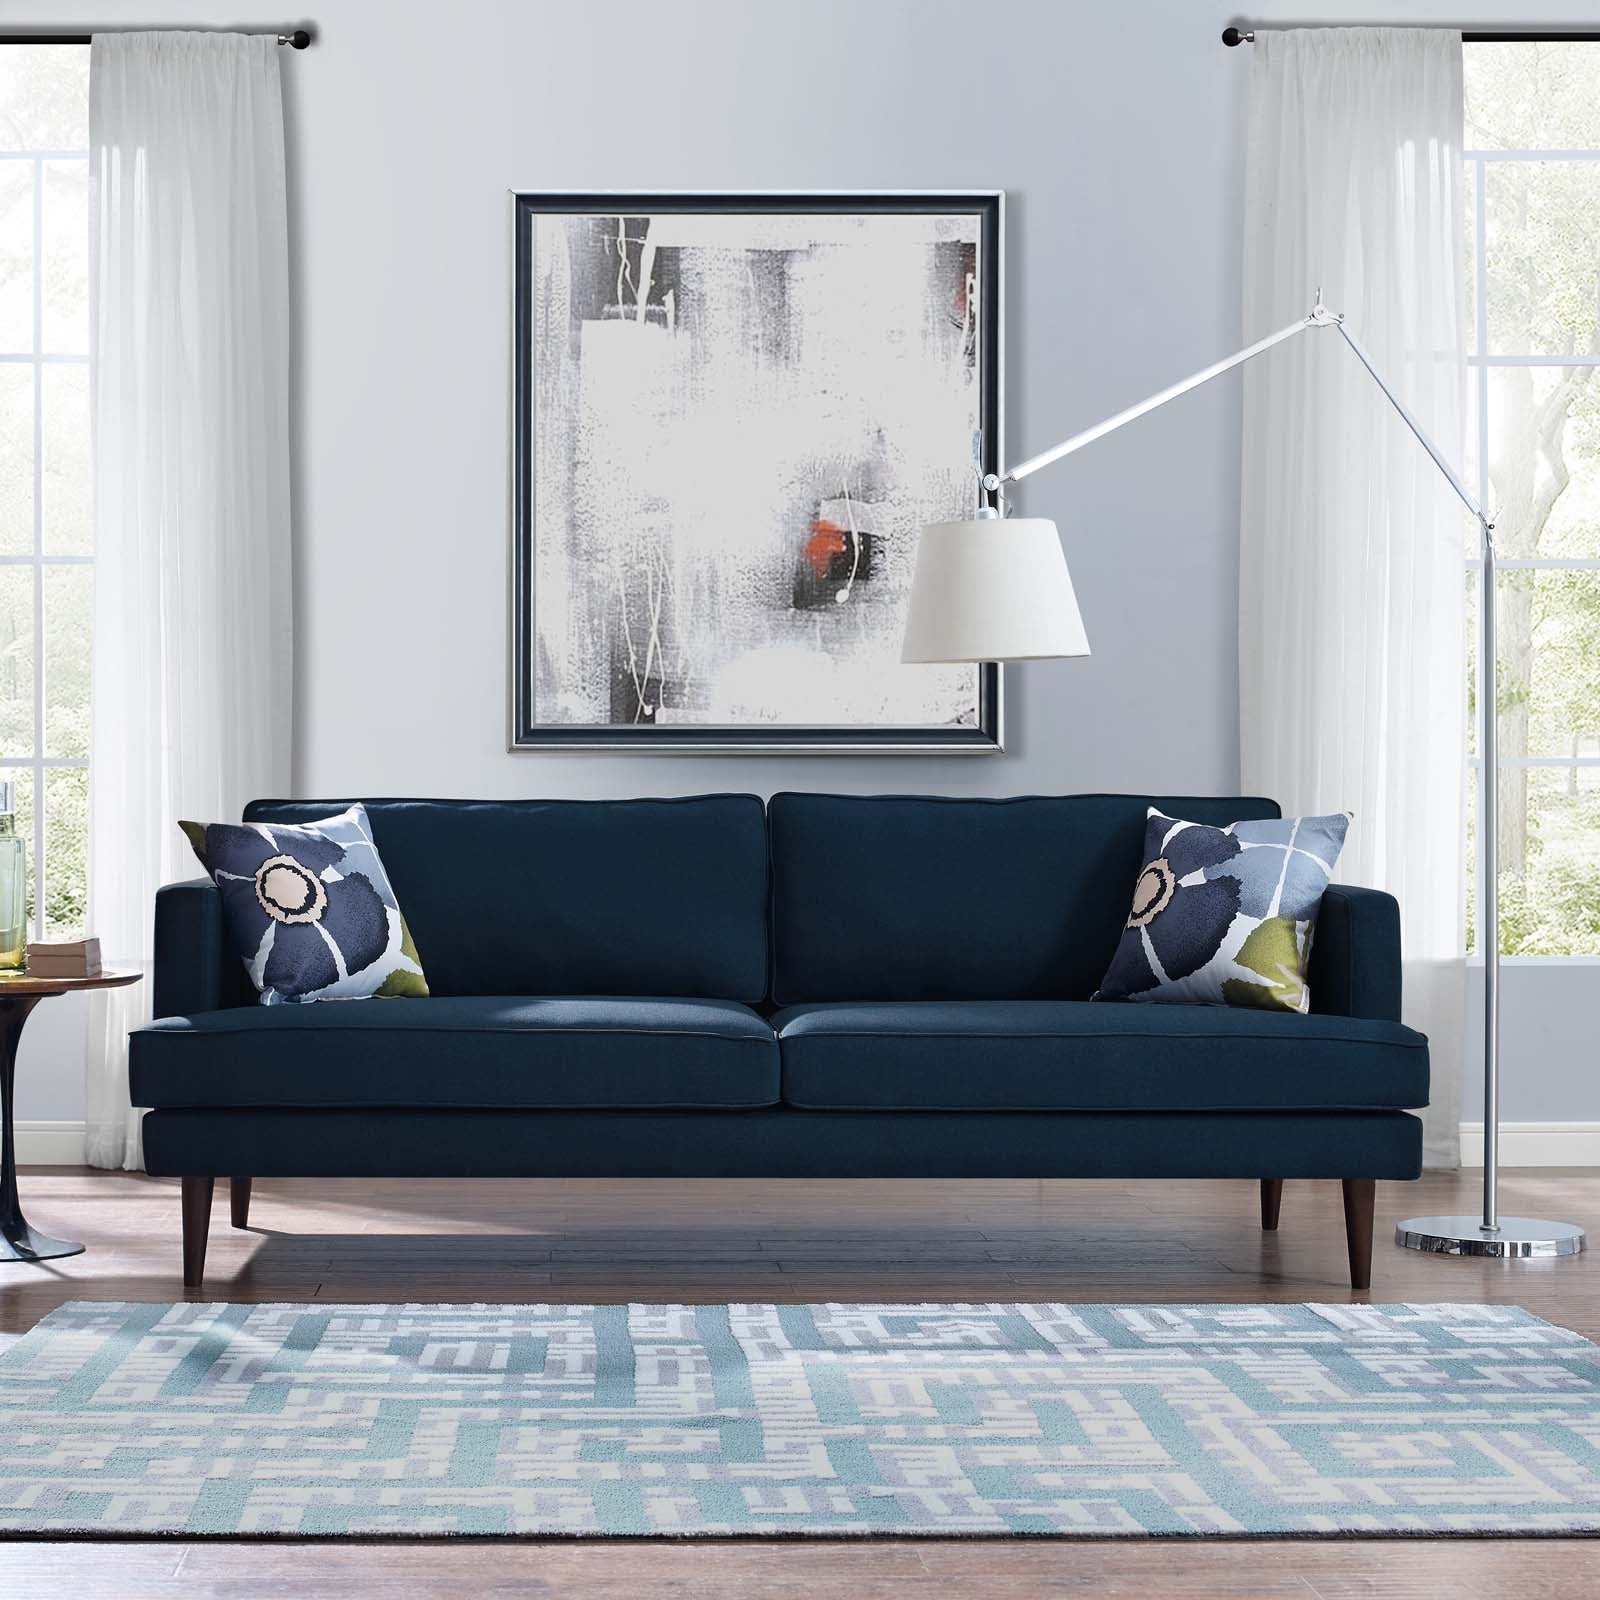 Agile Upholstered Fabric Sofa - East Shore Modern Home Furnishings